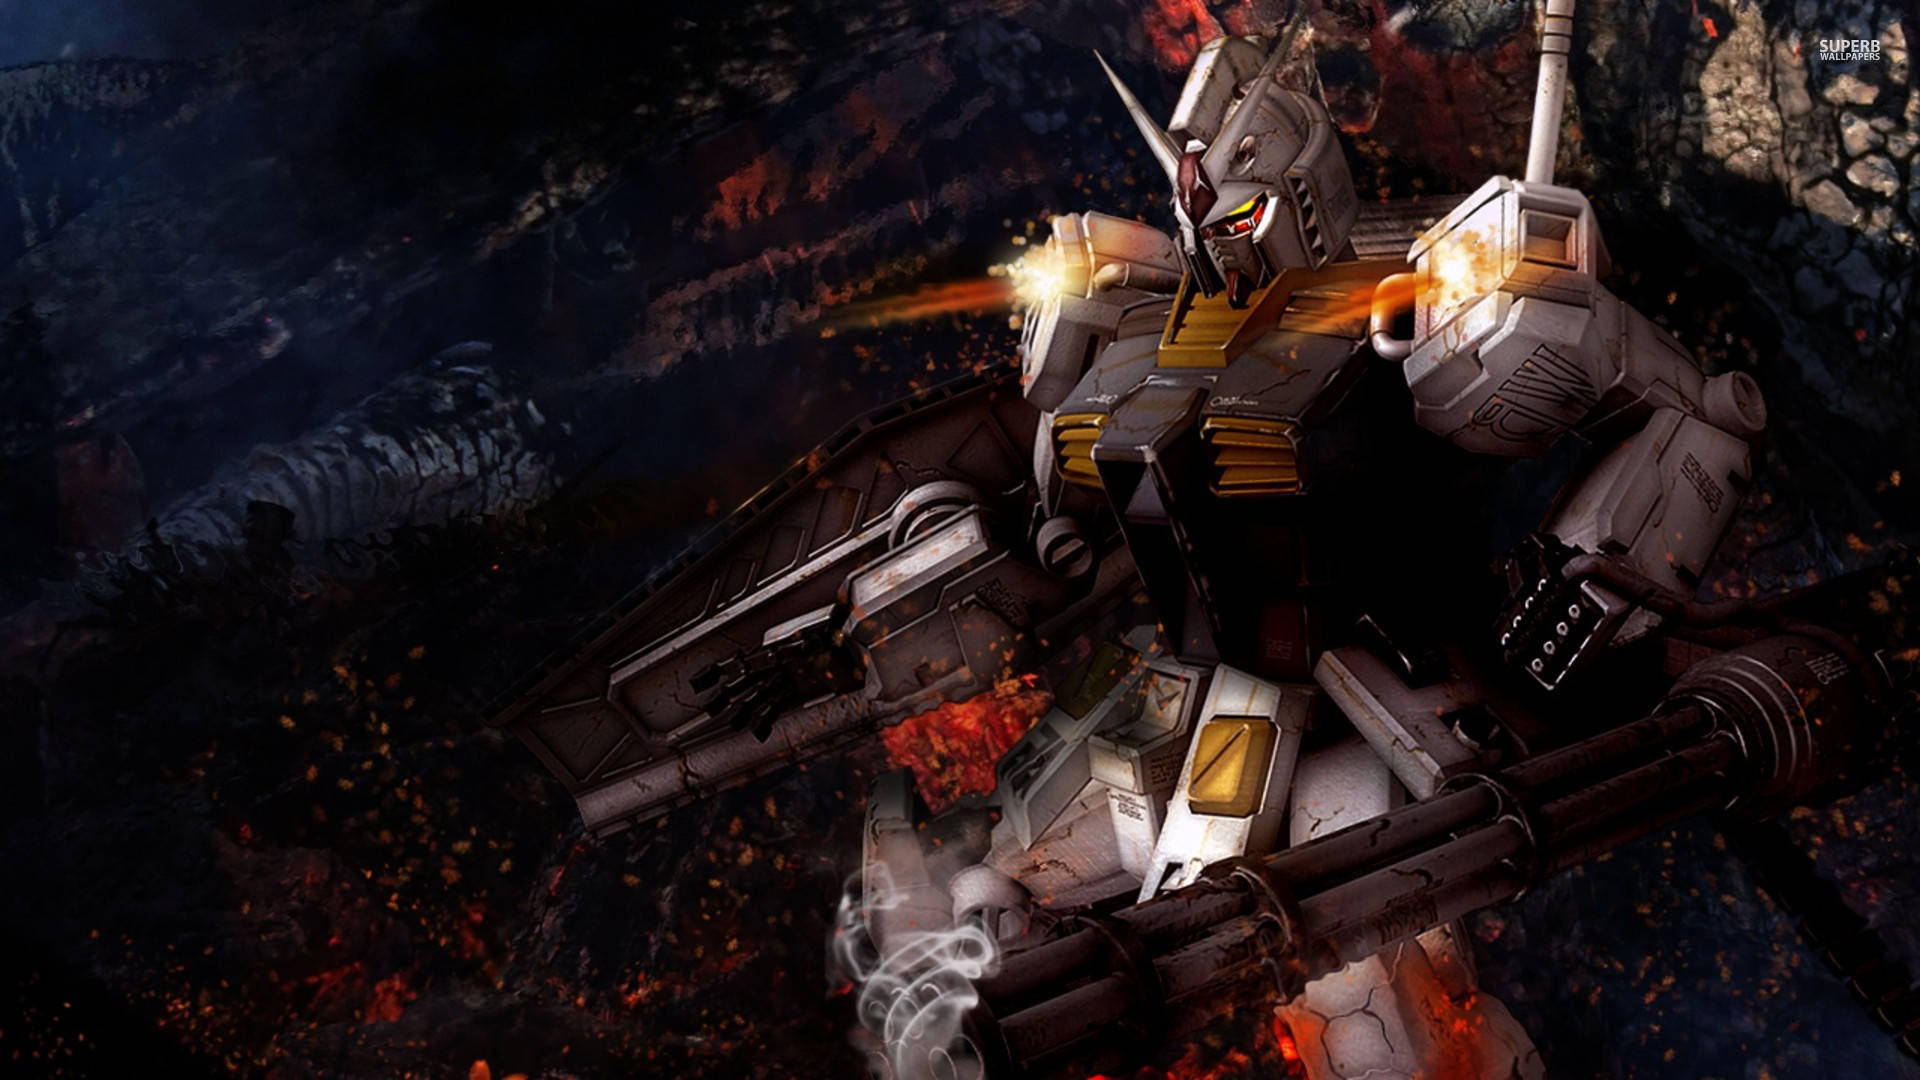 Mobile Suit Gundam Digital Art Background